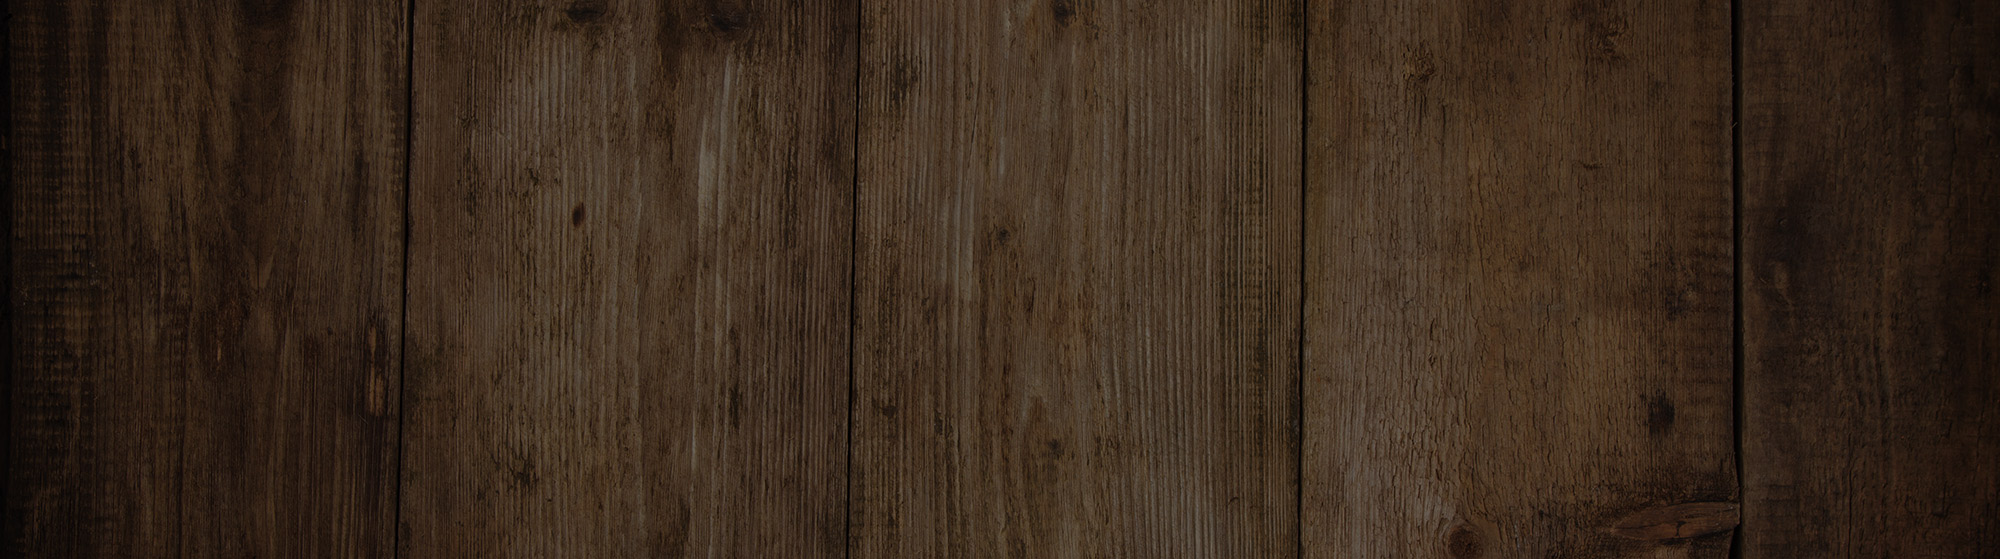 Wood texture background image